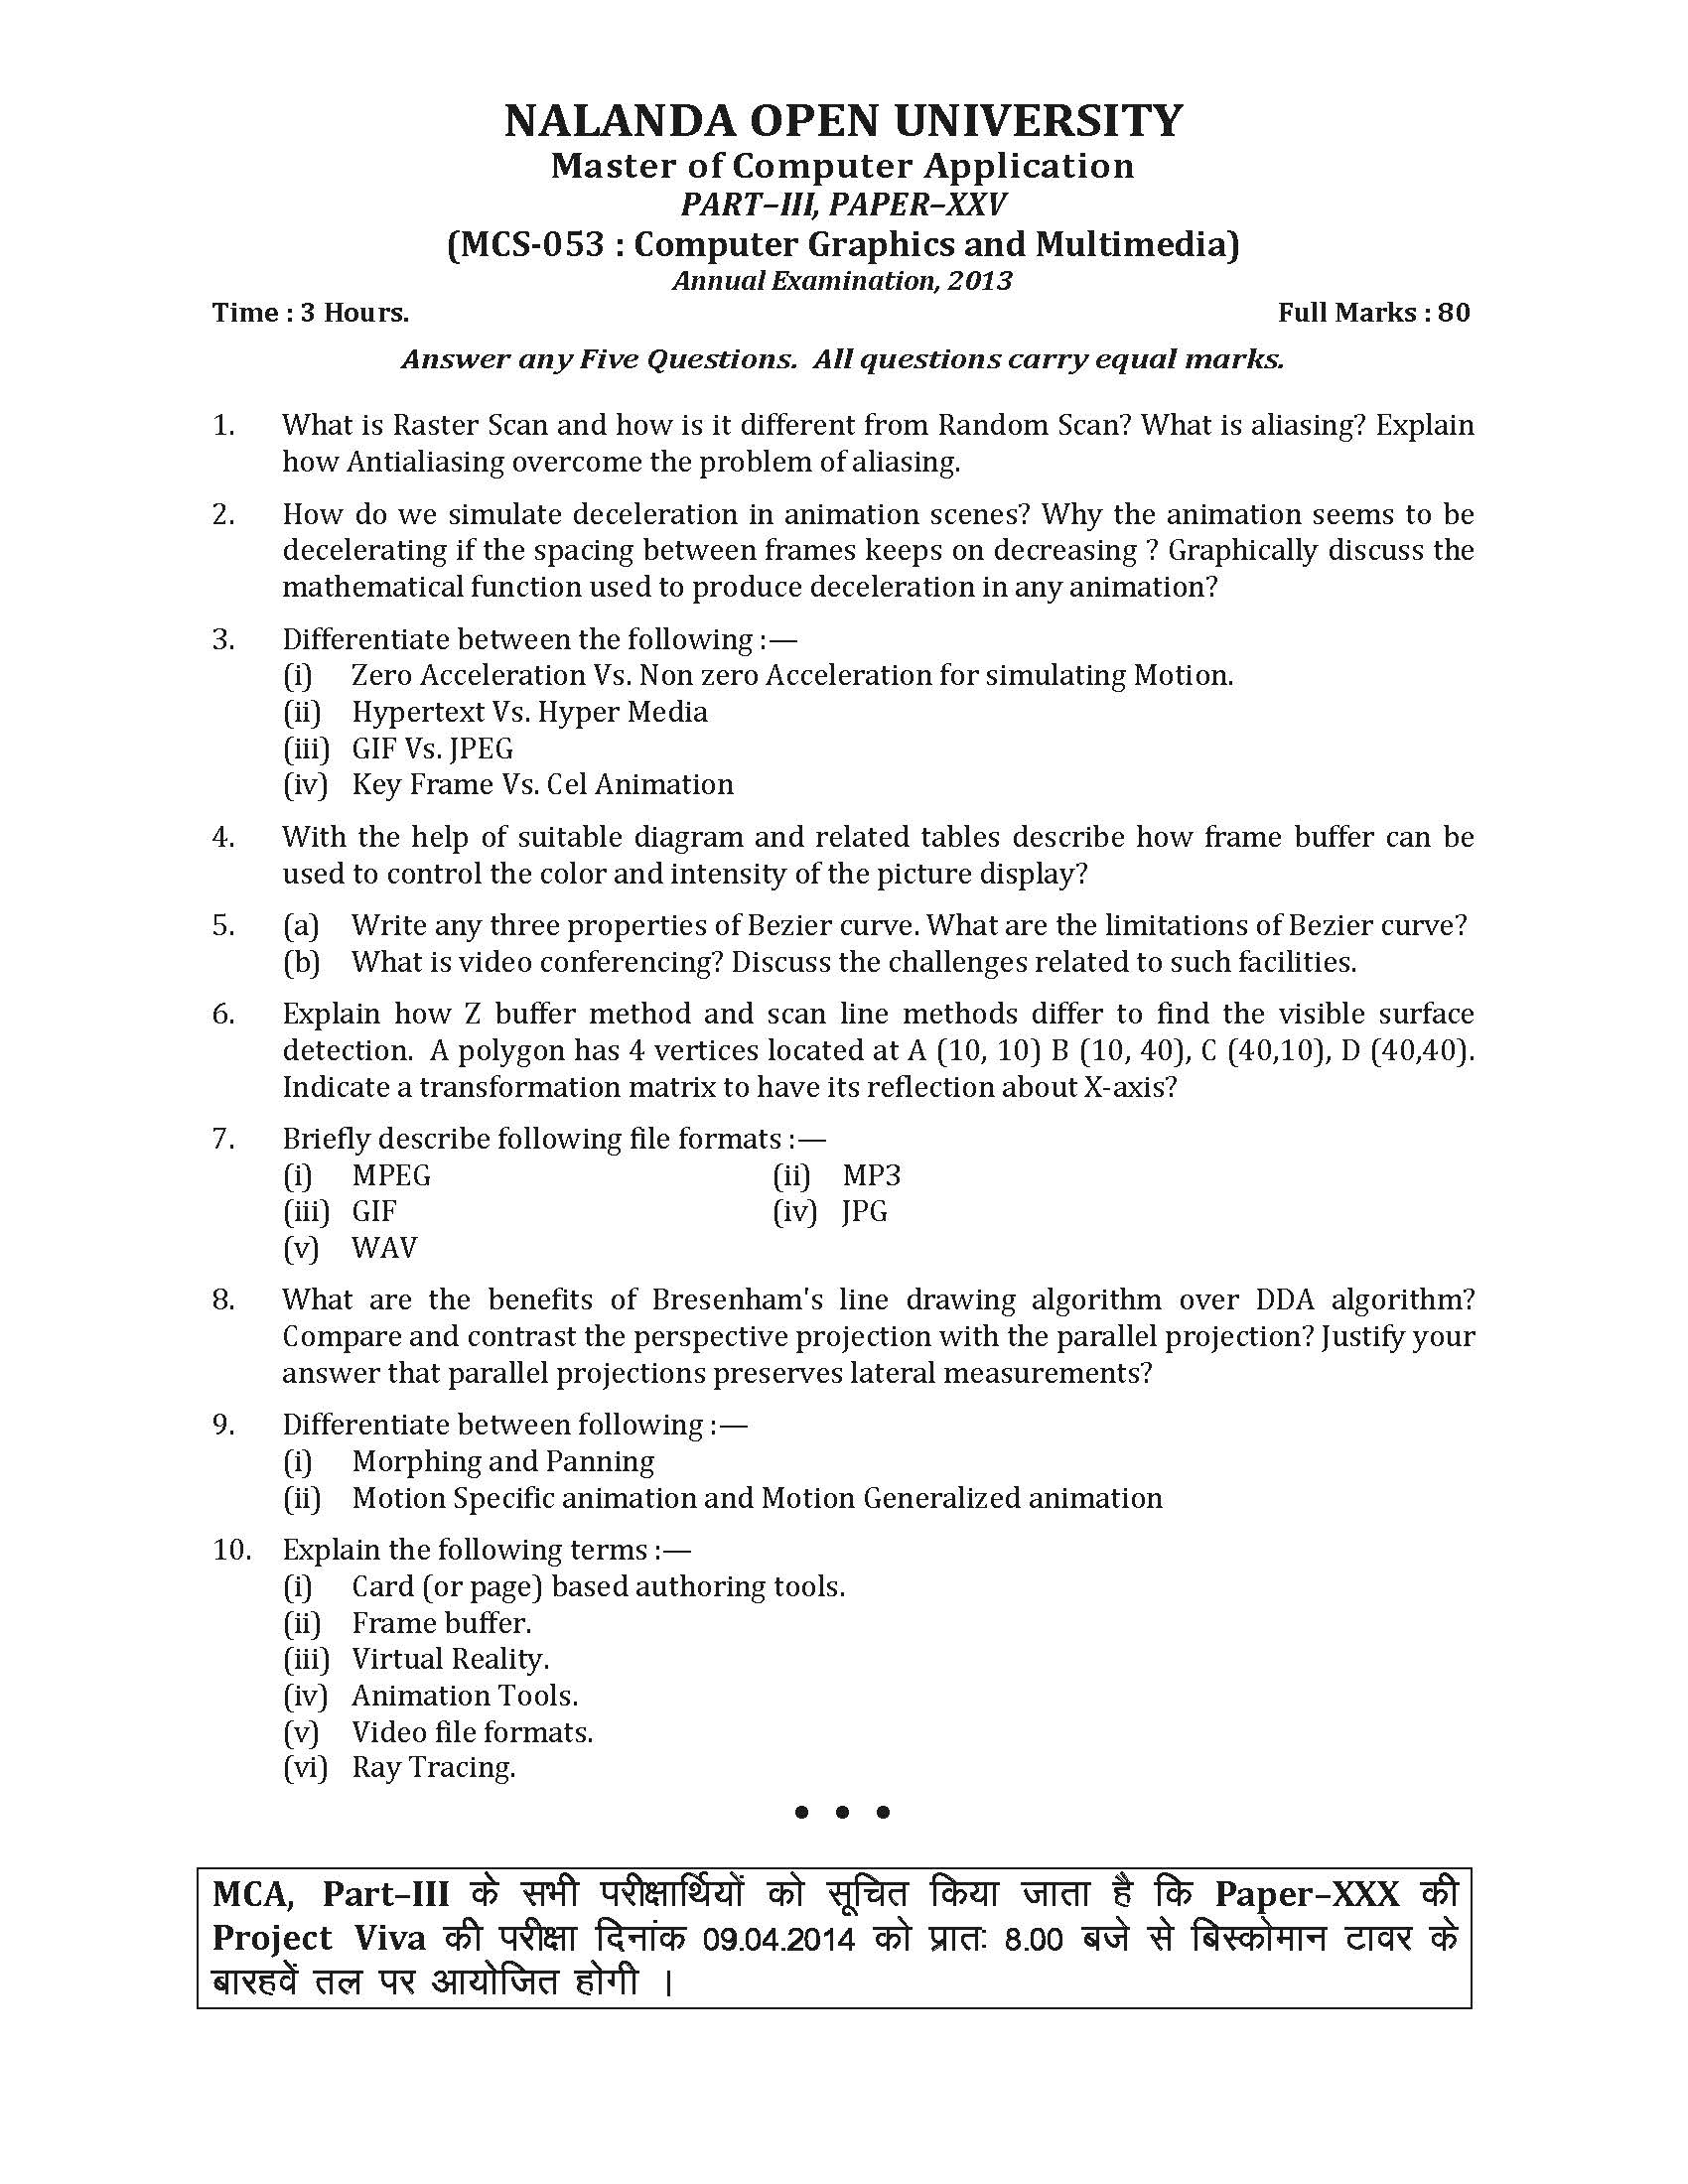 Nalanda Open University MCA Computer Graphics And Multimedia part III paper  XXV 2013 Question Paper PDF Download | ENTRANCE INDIA